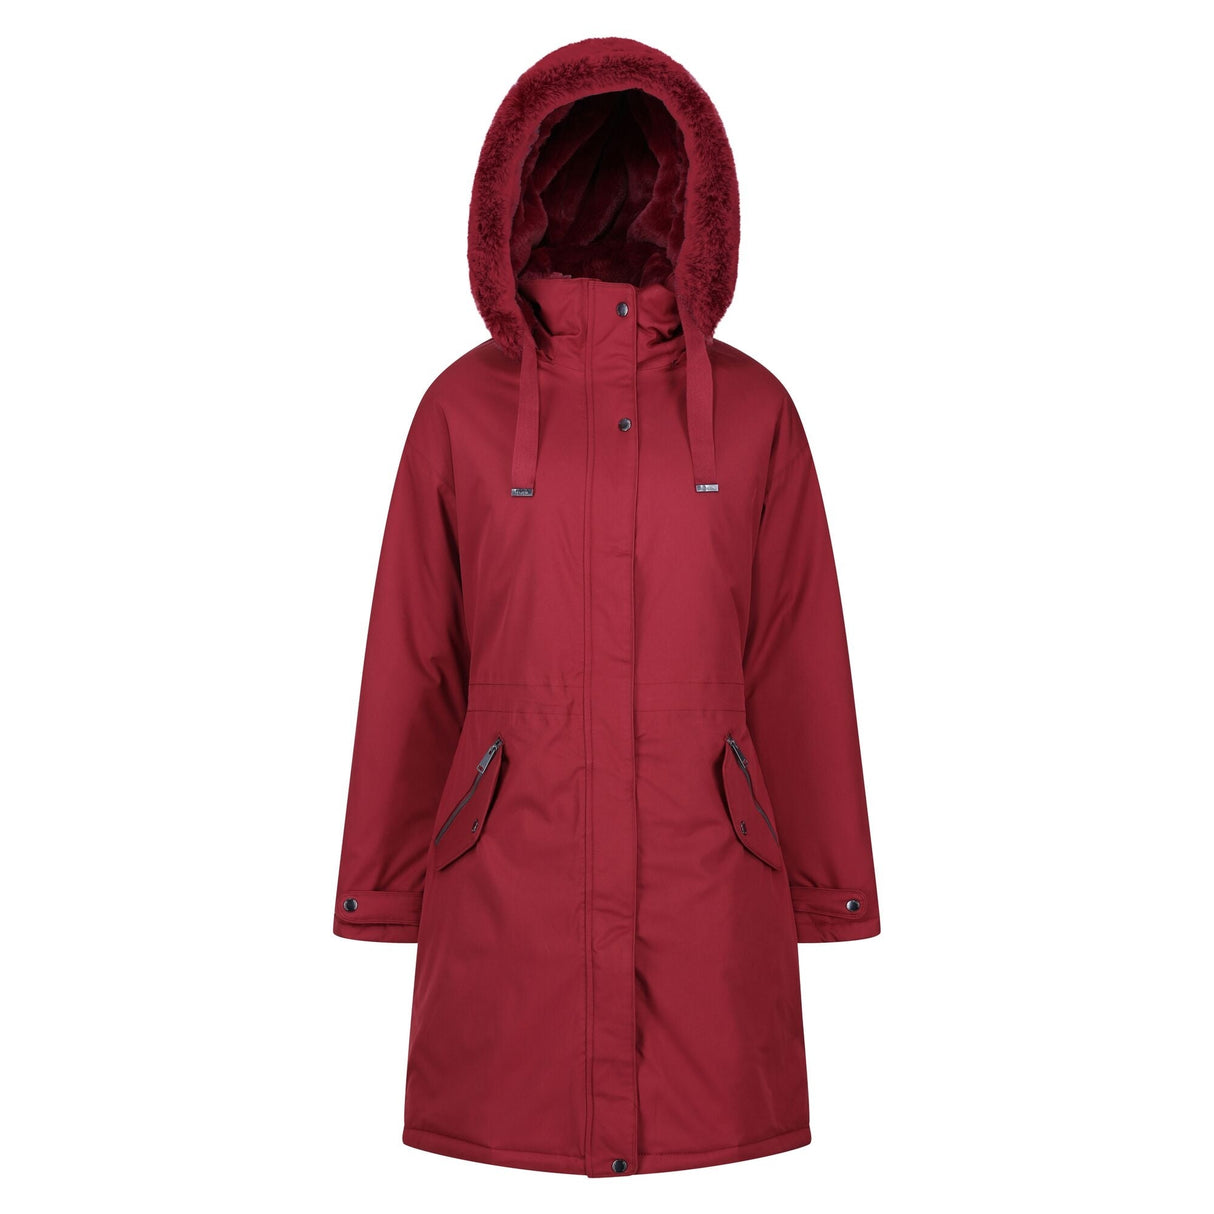 Regatta Women's Samaria Waterproof Jacket - Premium clothing from Regatta - Just $54.99! Shop now at Warwickshire Clothing